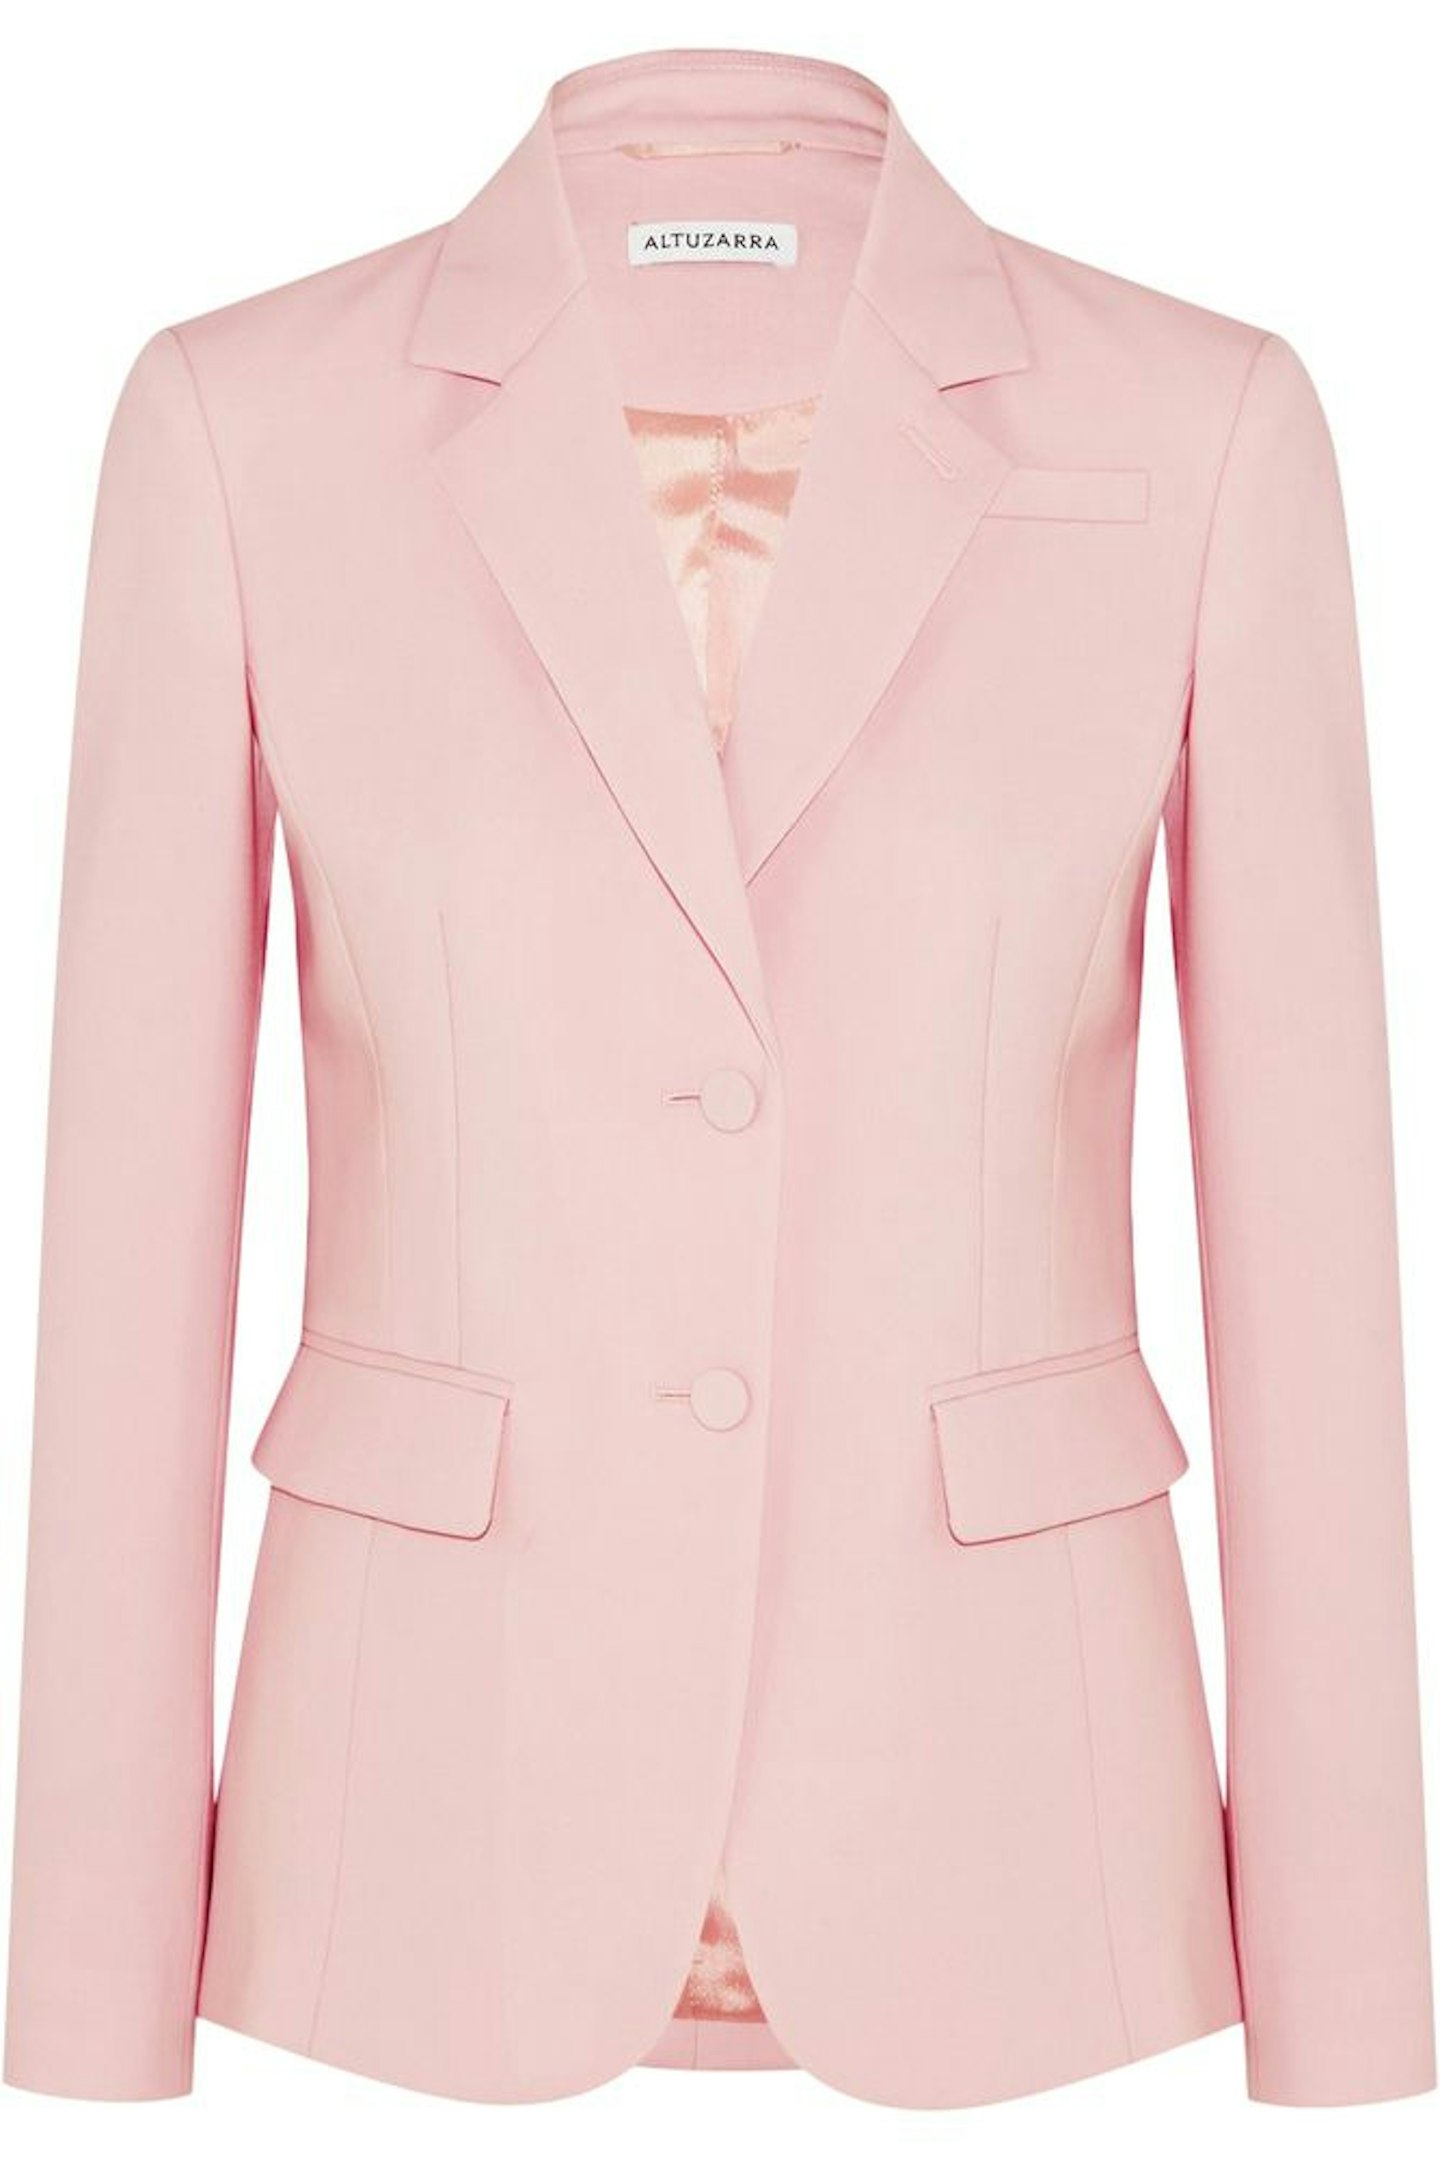 Pink suit blazer